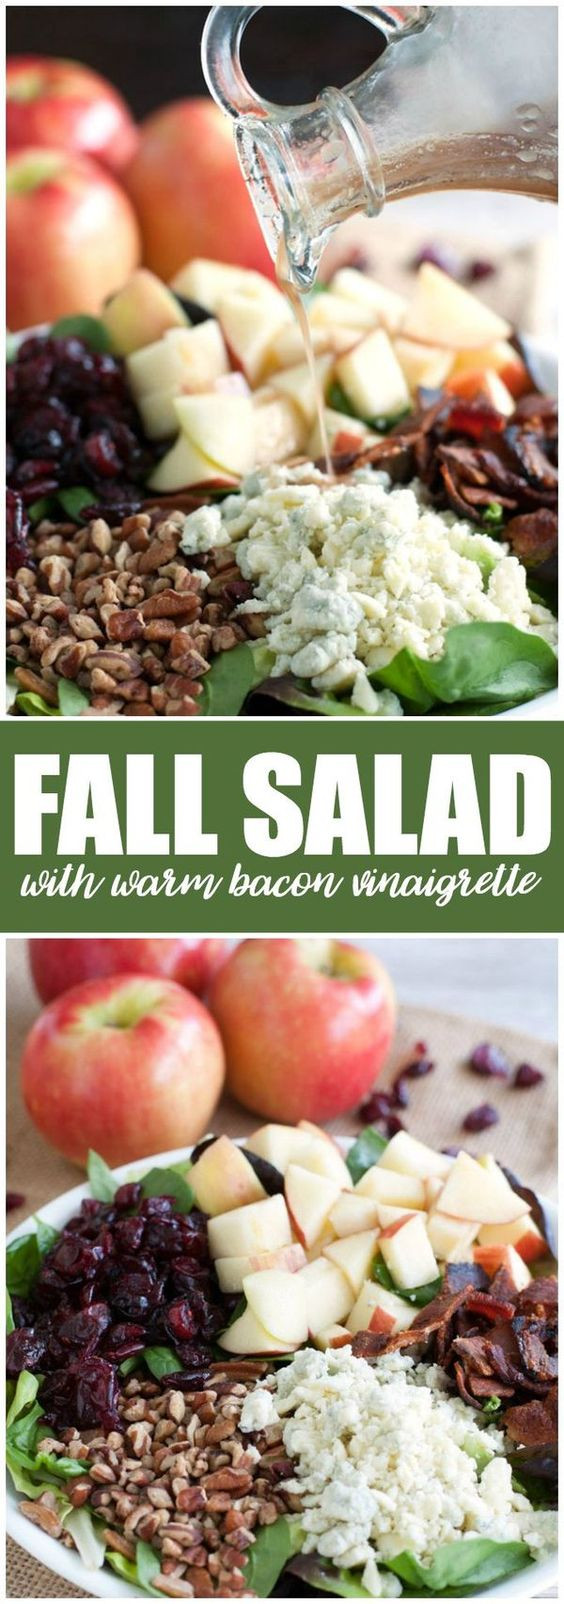 Fall Salad Dressings
 Fall Salad with Warm Bacon Vinaigrette Recipe